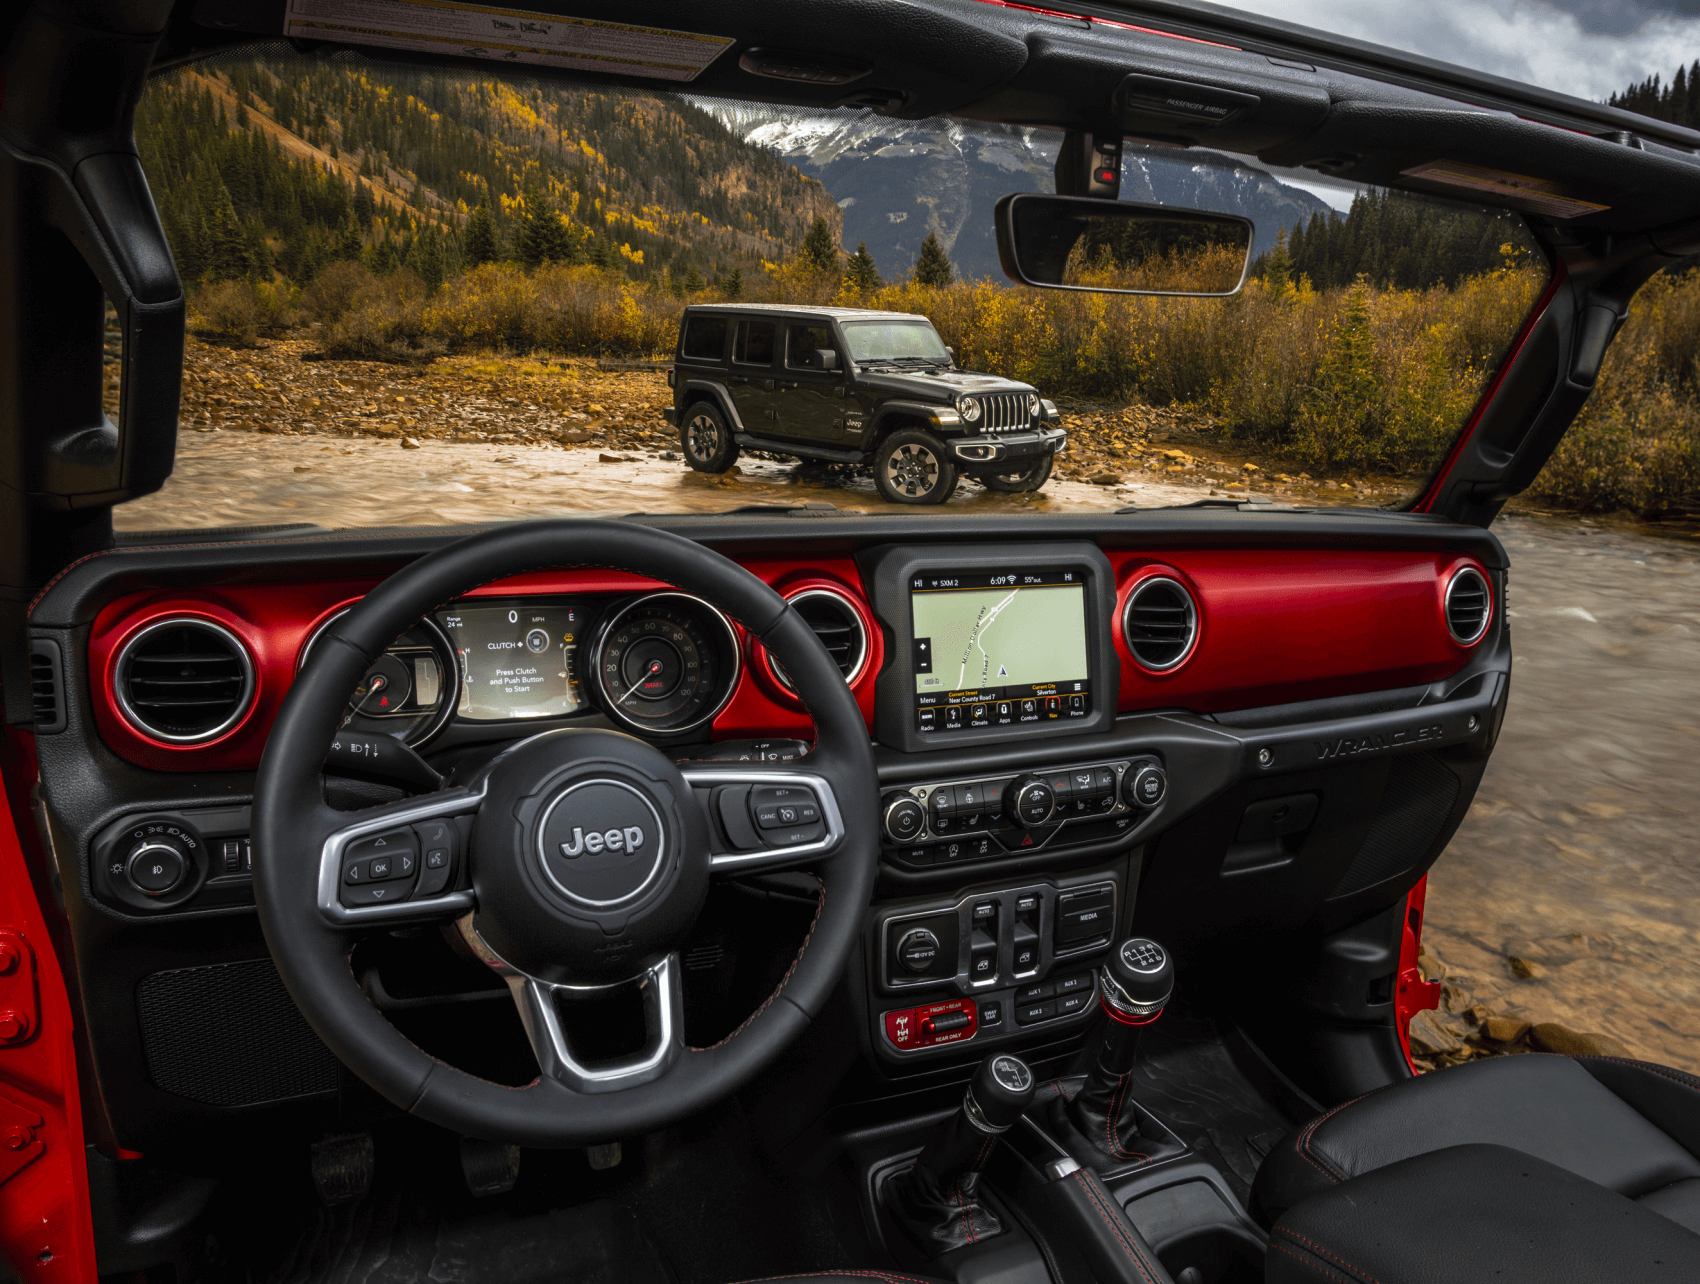 Jeep Wrangler Dashboard Technology Interior